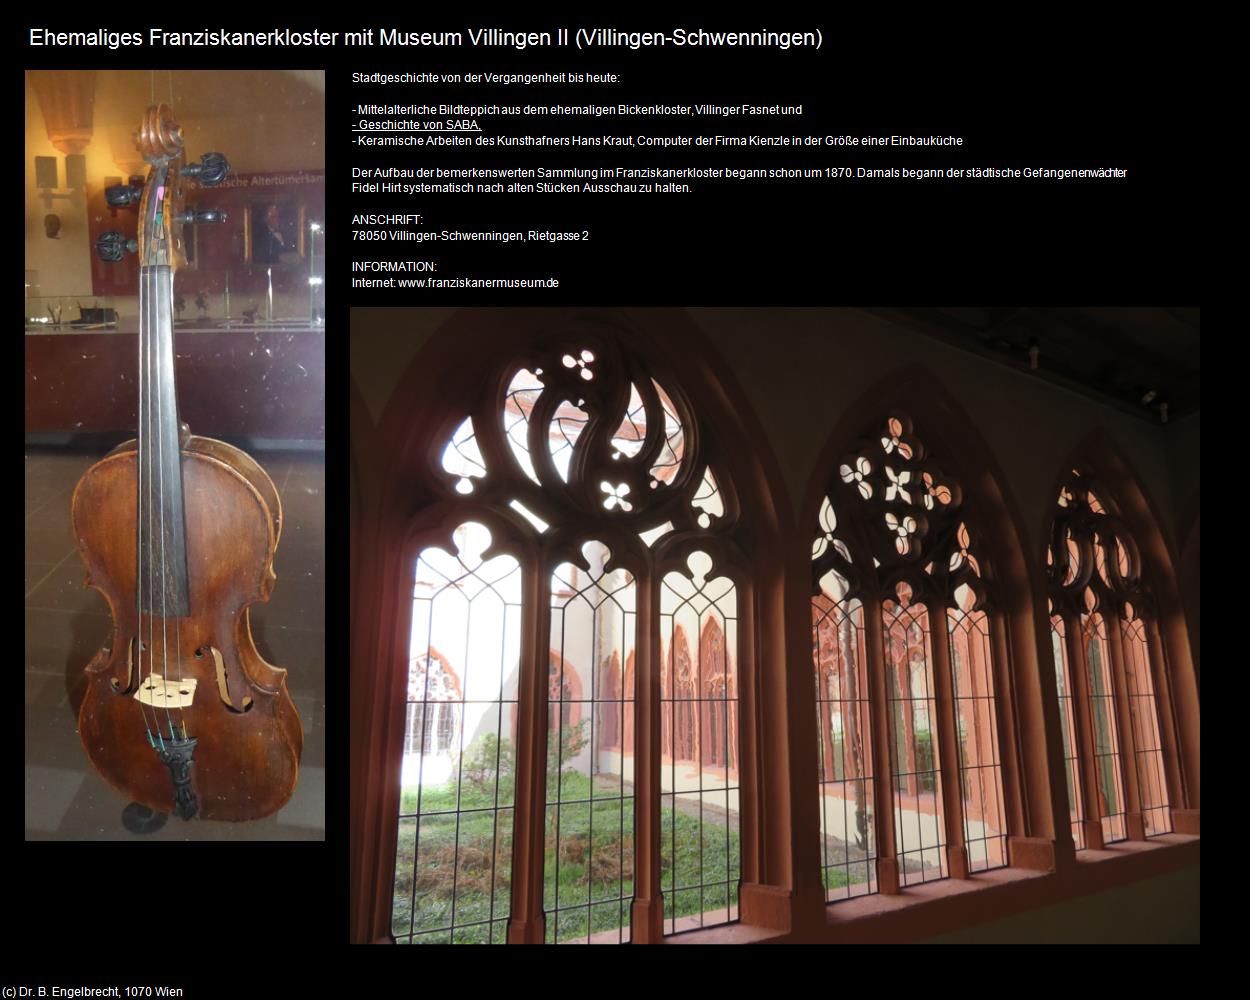 Ehem. Franziskanerkloster mit Museum II (Villingen) (Villingen-Schwenningen ) in Kulturatlas-BADEN-WÜRTTEMBERG(c)B.Engelbrecht